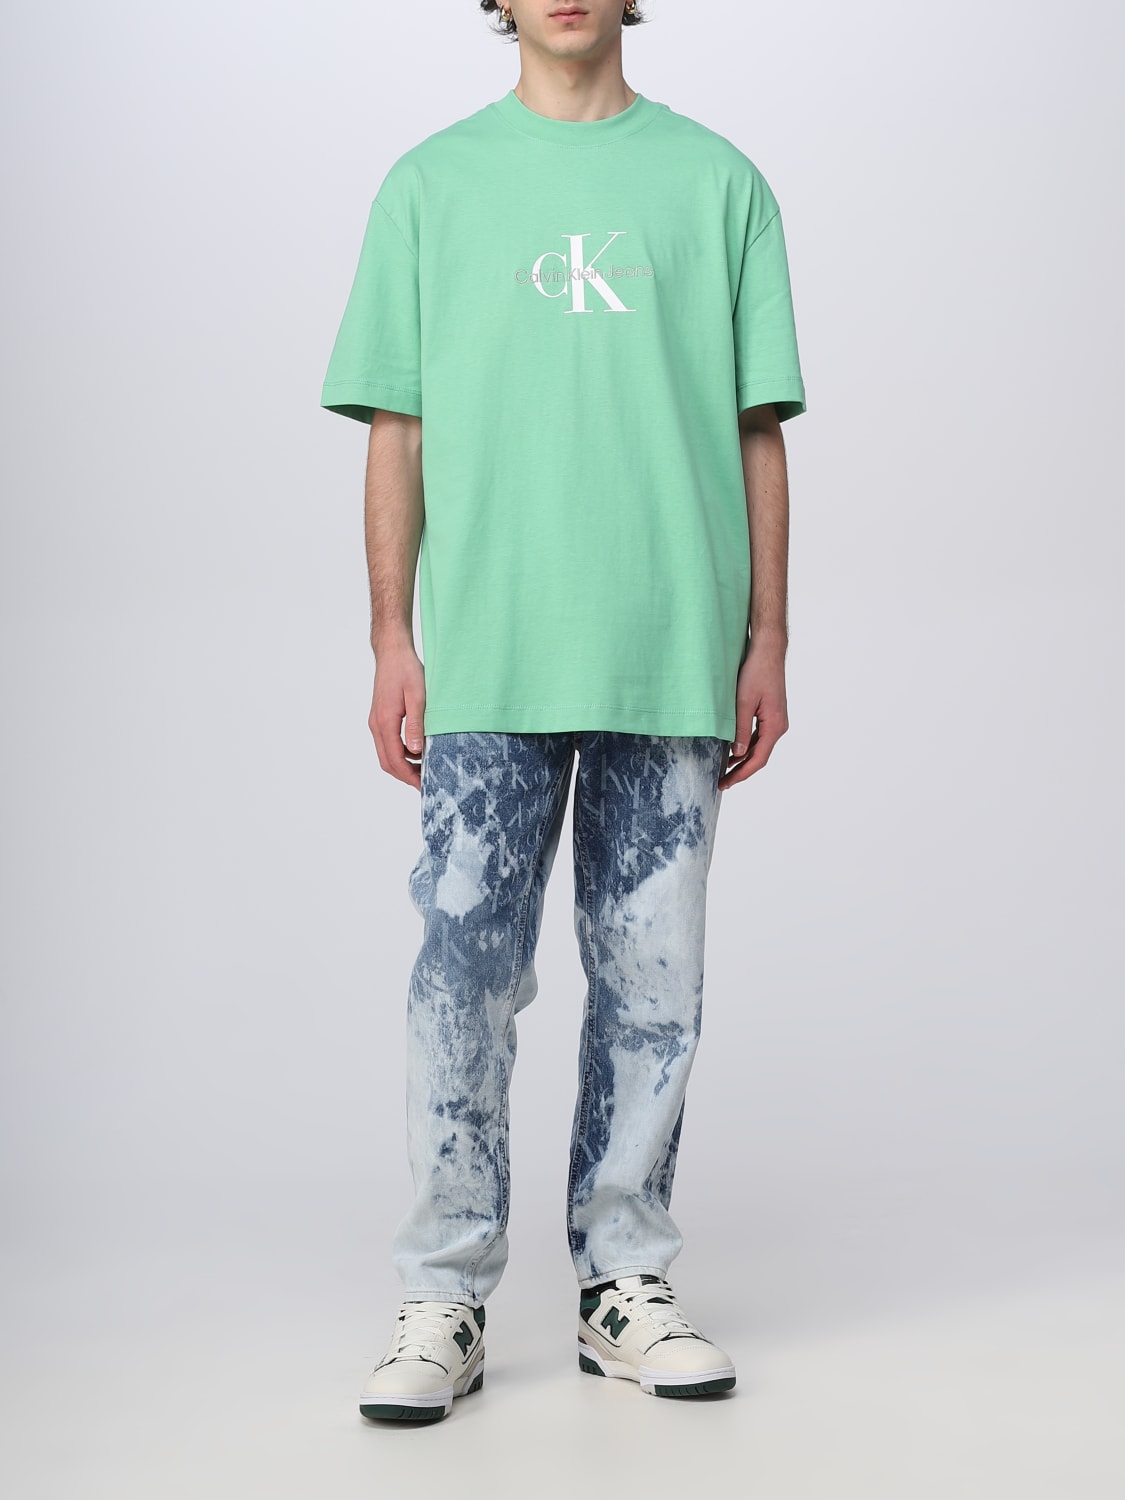 CALVIN KLEIN JEANS: Water online Jeans t-shirt t-shirt Klein - Calvin at | J30J323307 man for